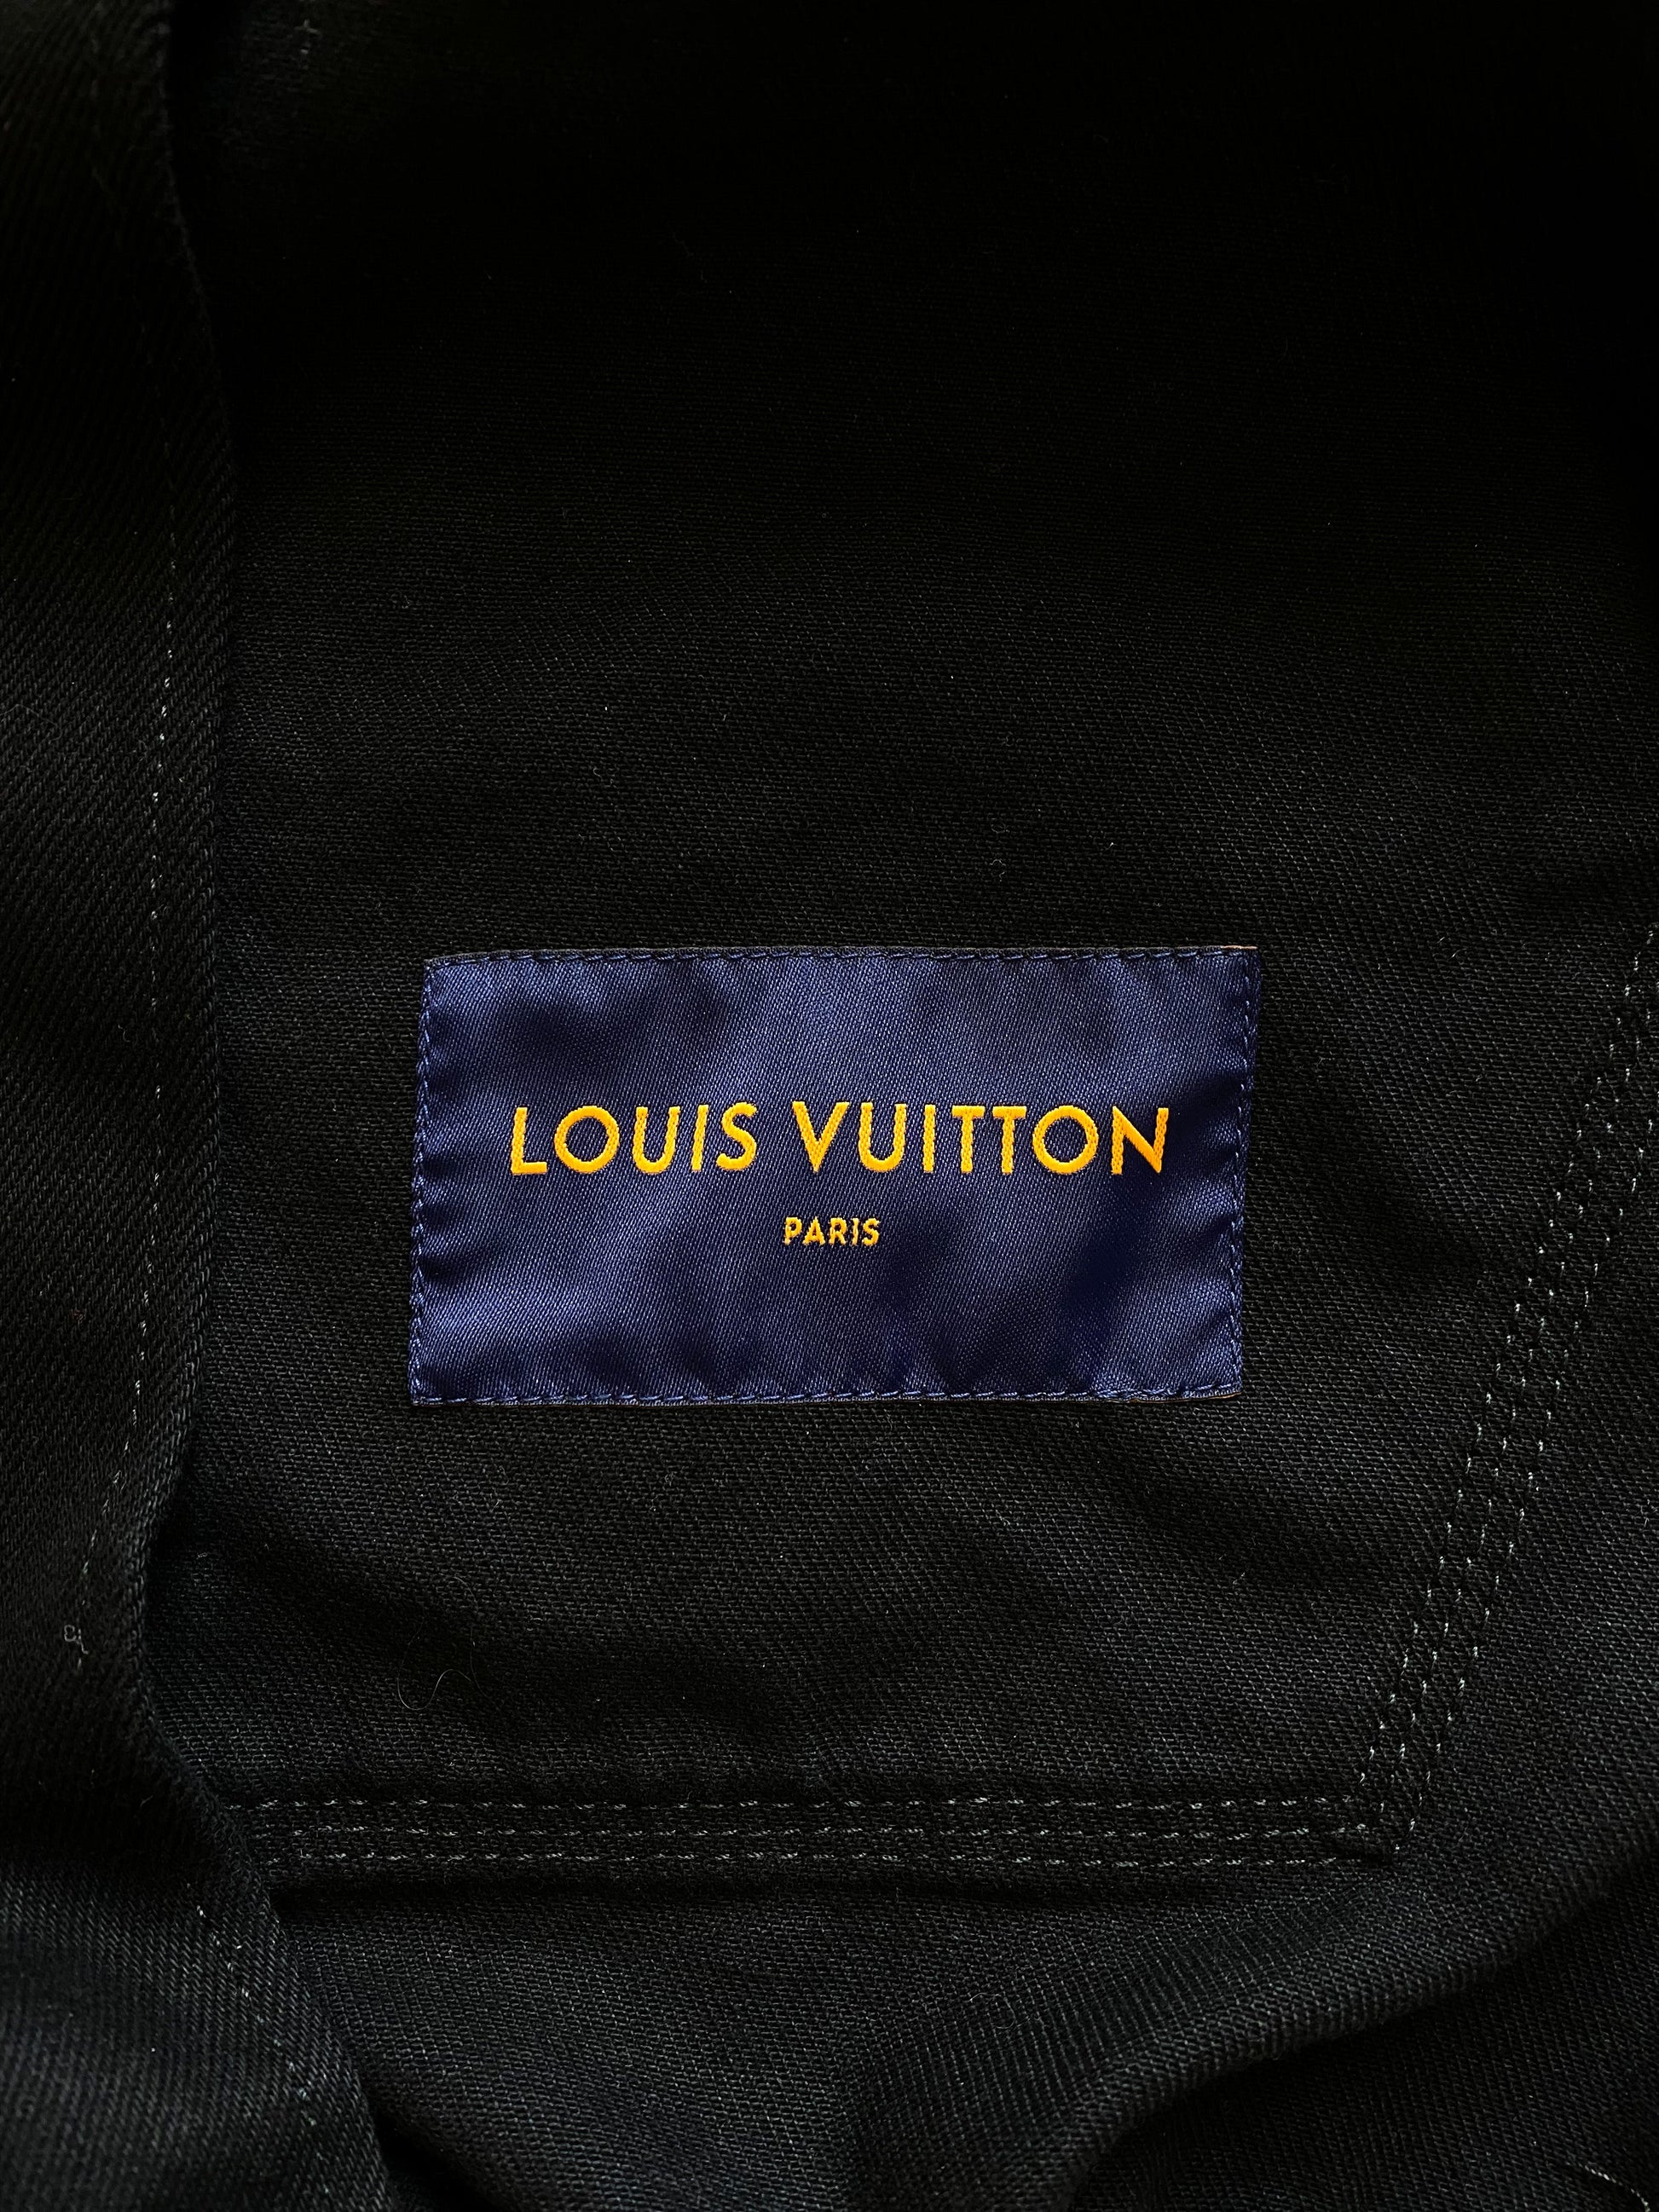 LOUIS VUITTON black nylon 2022 MONOGRAM PARKA CAPE Jacket 36 XS